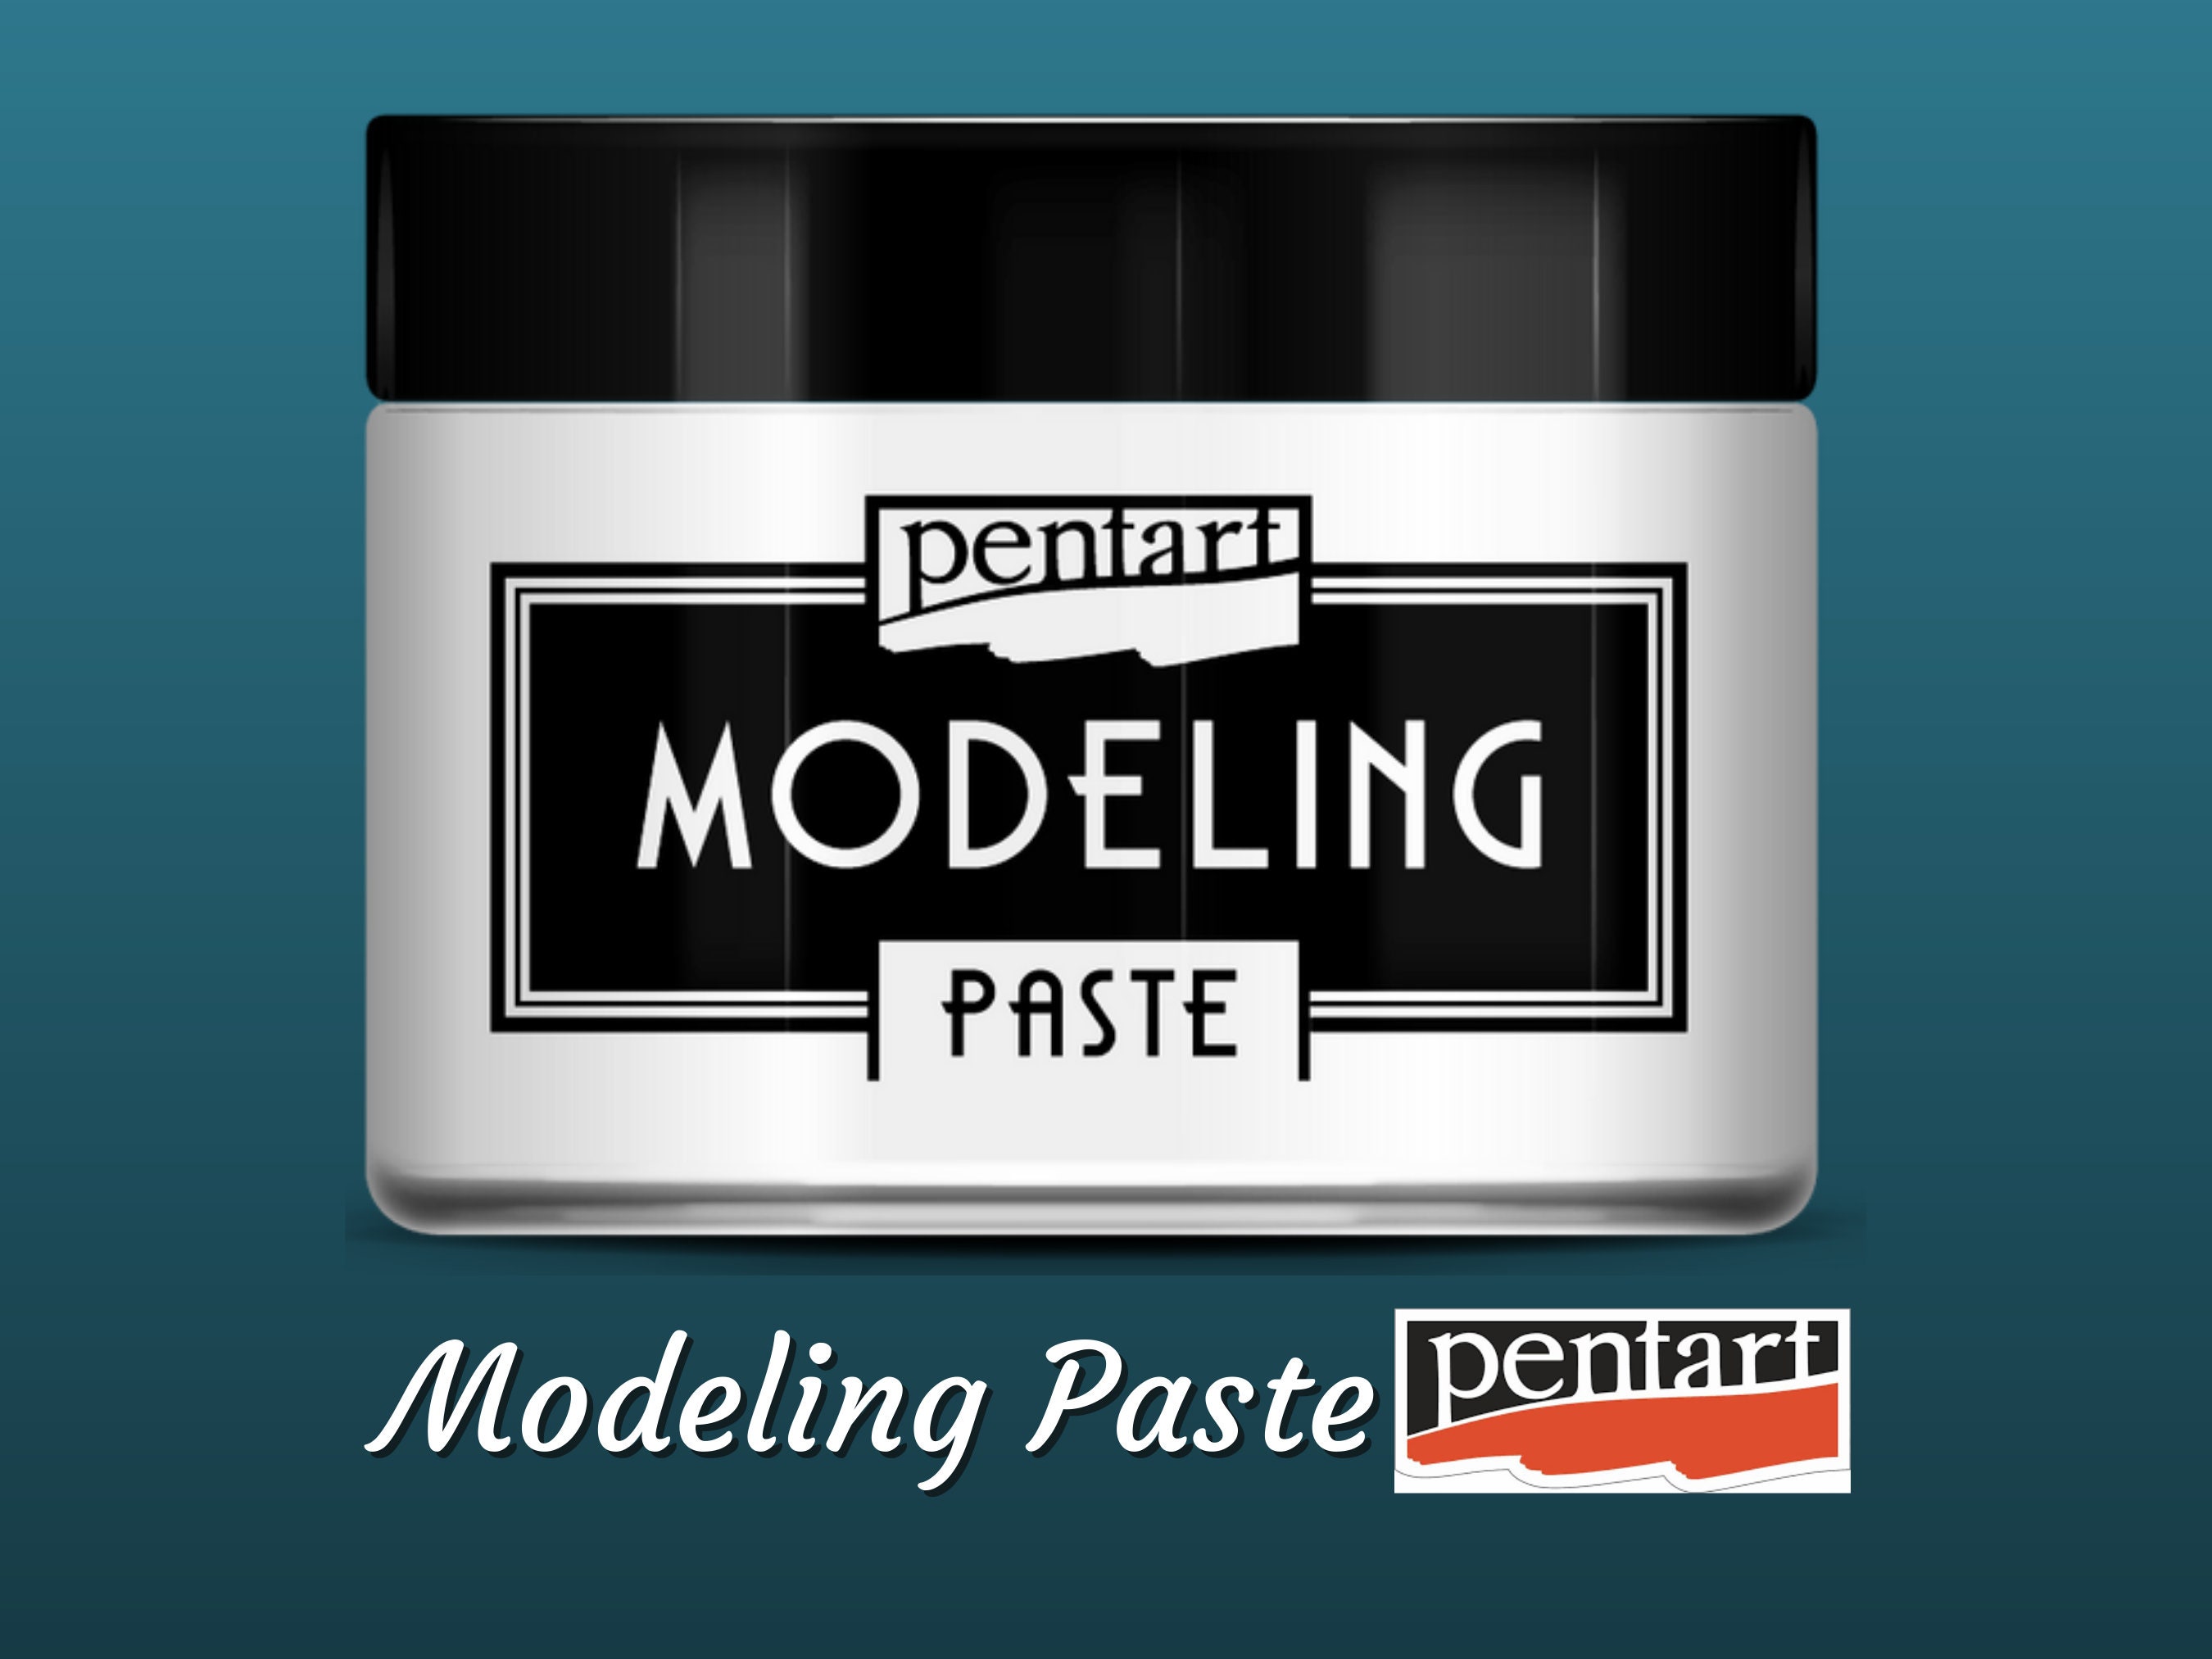 Modeling Paste by Pentart – Milton's Daughter